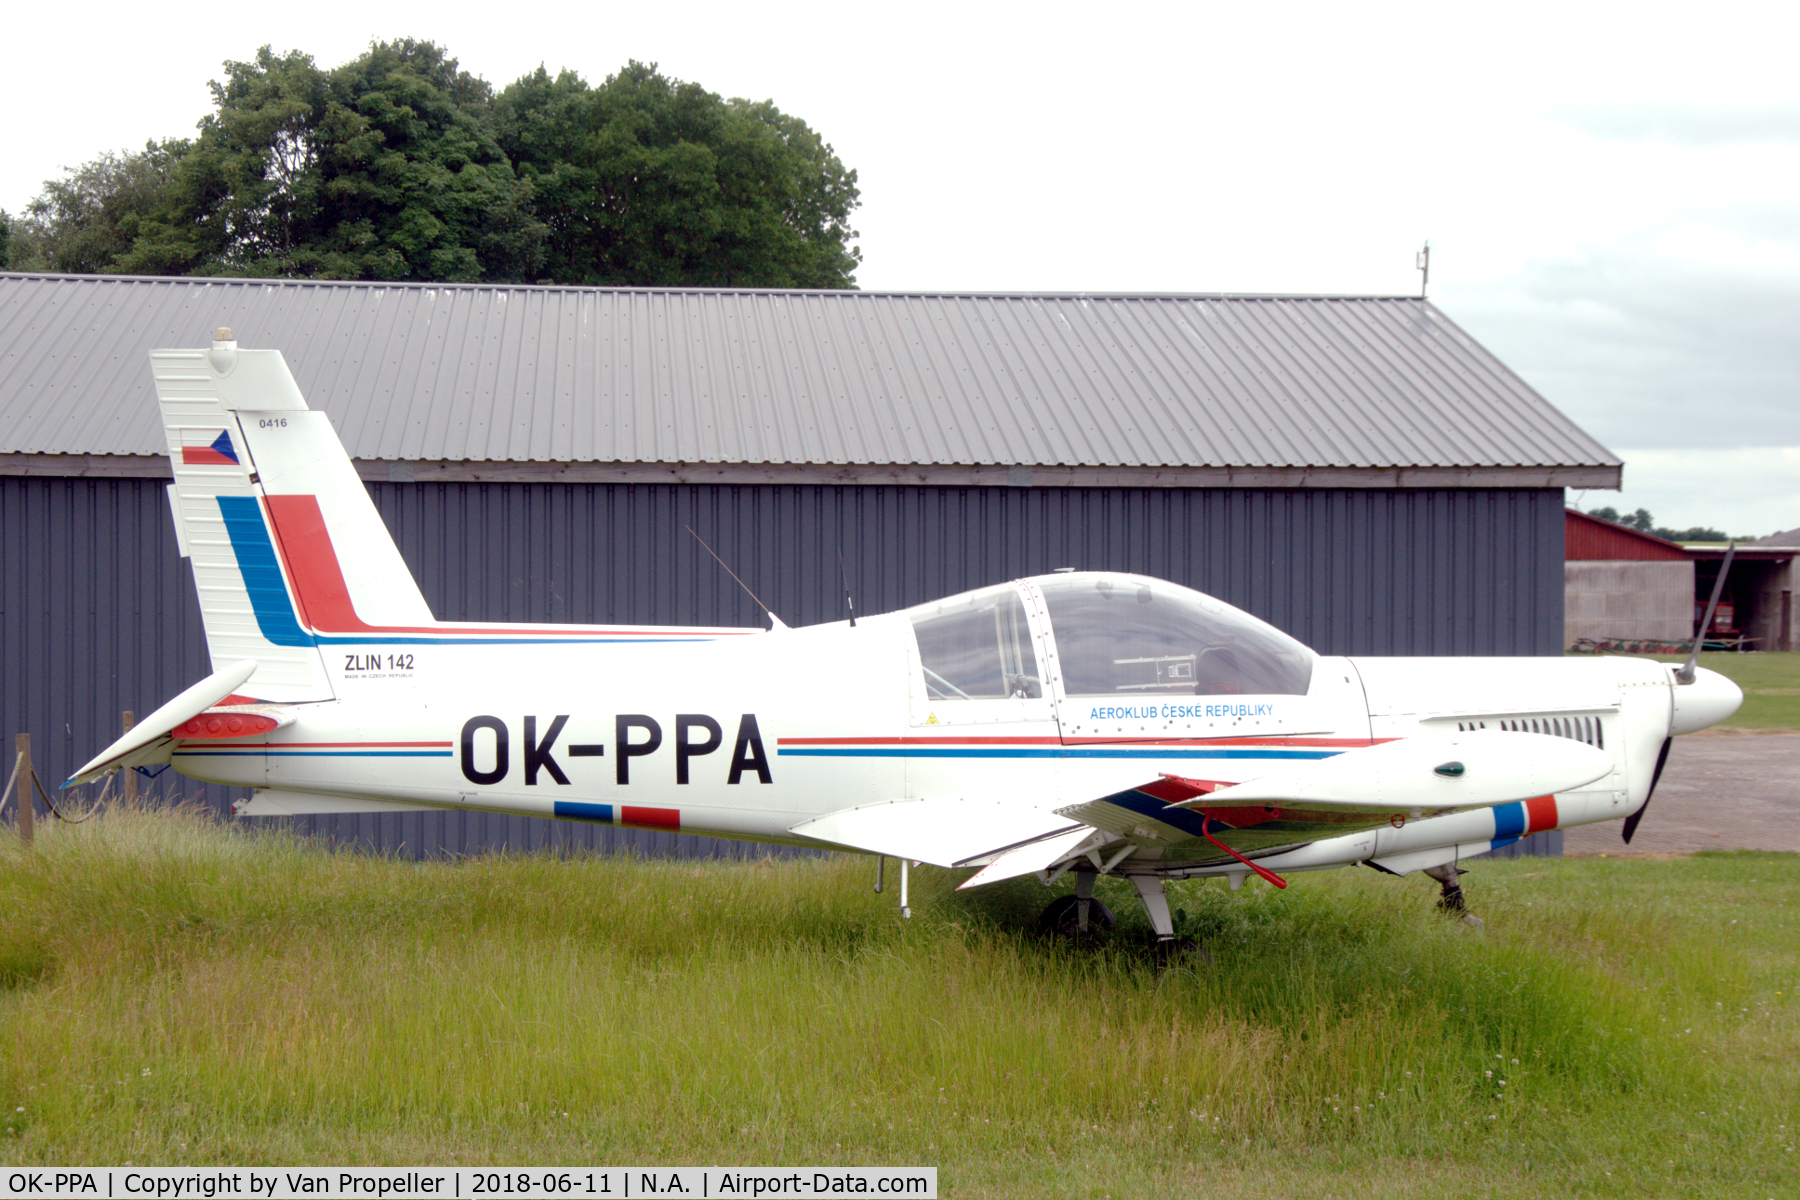 OK-PPA, Zlin Z-142 C/N 0416, Zlin Z 142 of Aeroklub Ceské Republiky at Raarup Flyveplads, Denmark